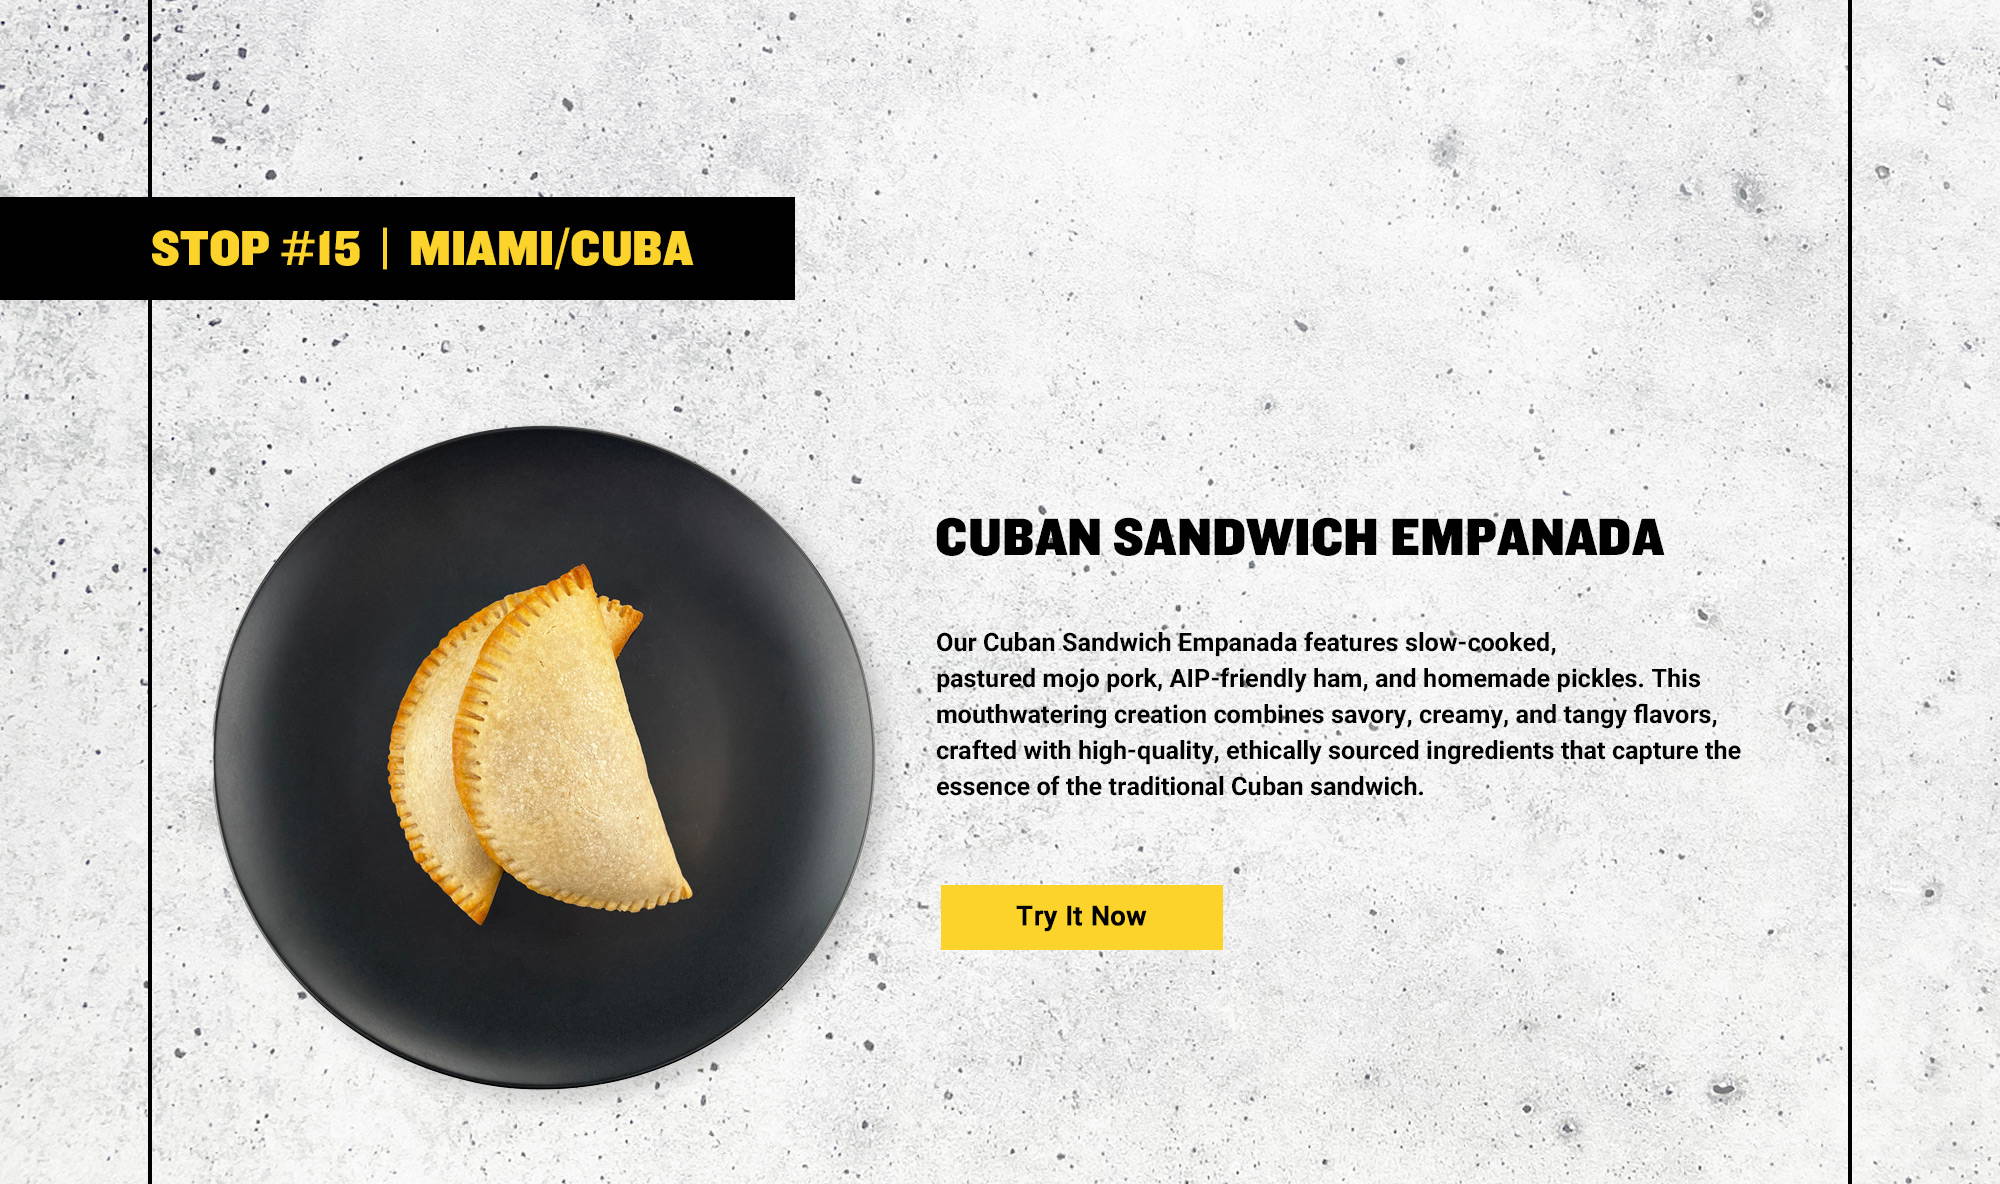 Cuban Sandwich Empanadas